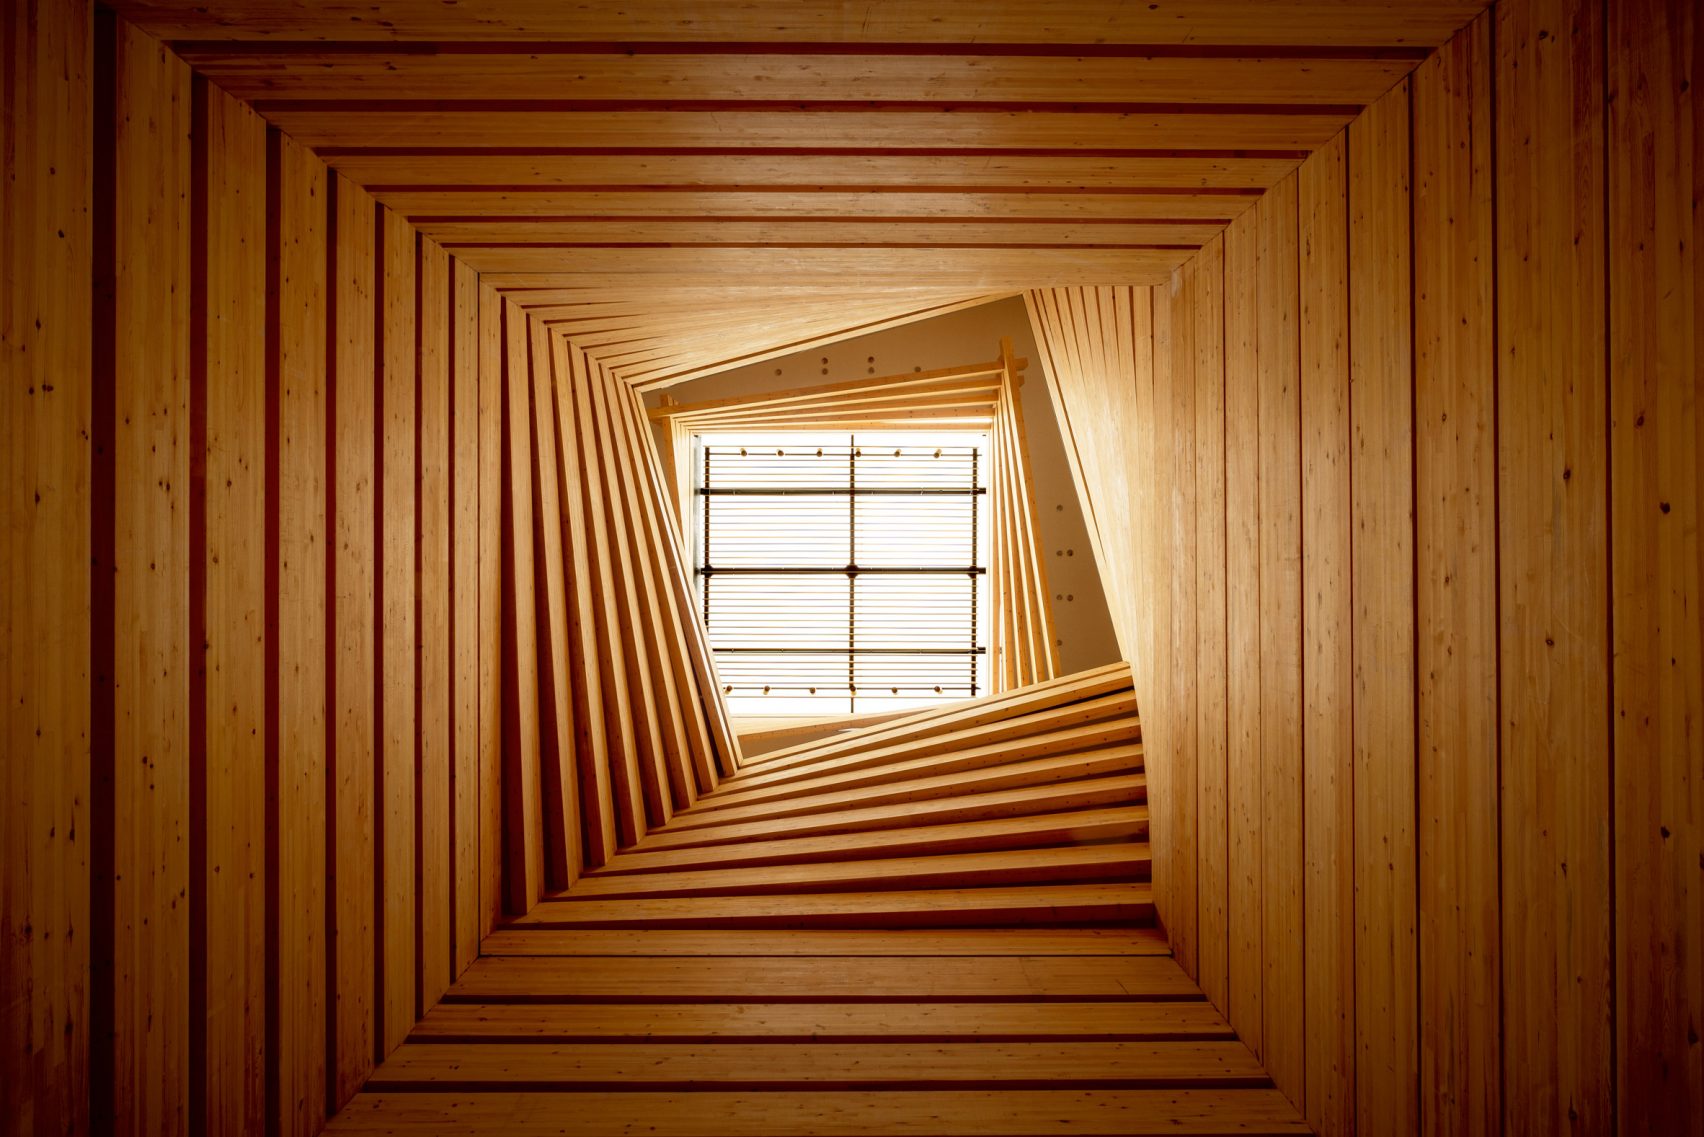 Kengo Kuma S Stacked Timber Odunpazari Modern Museum Opens